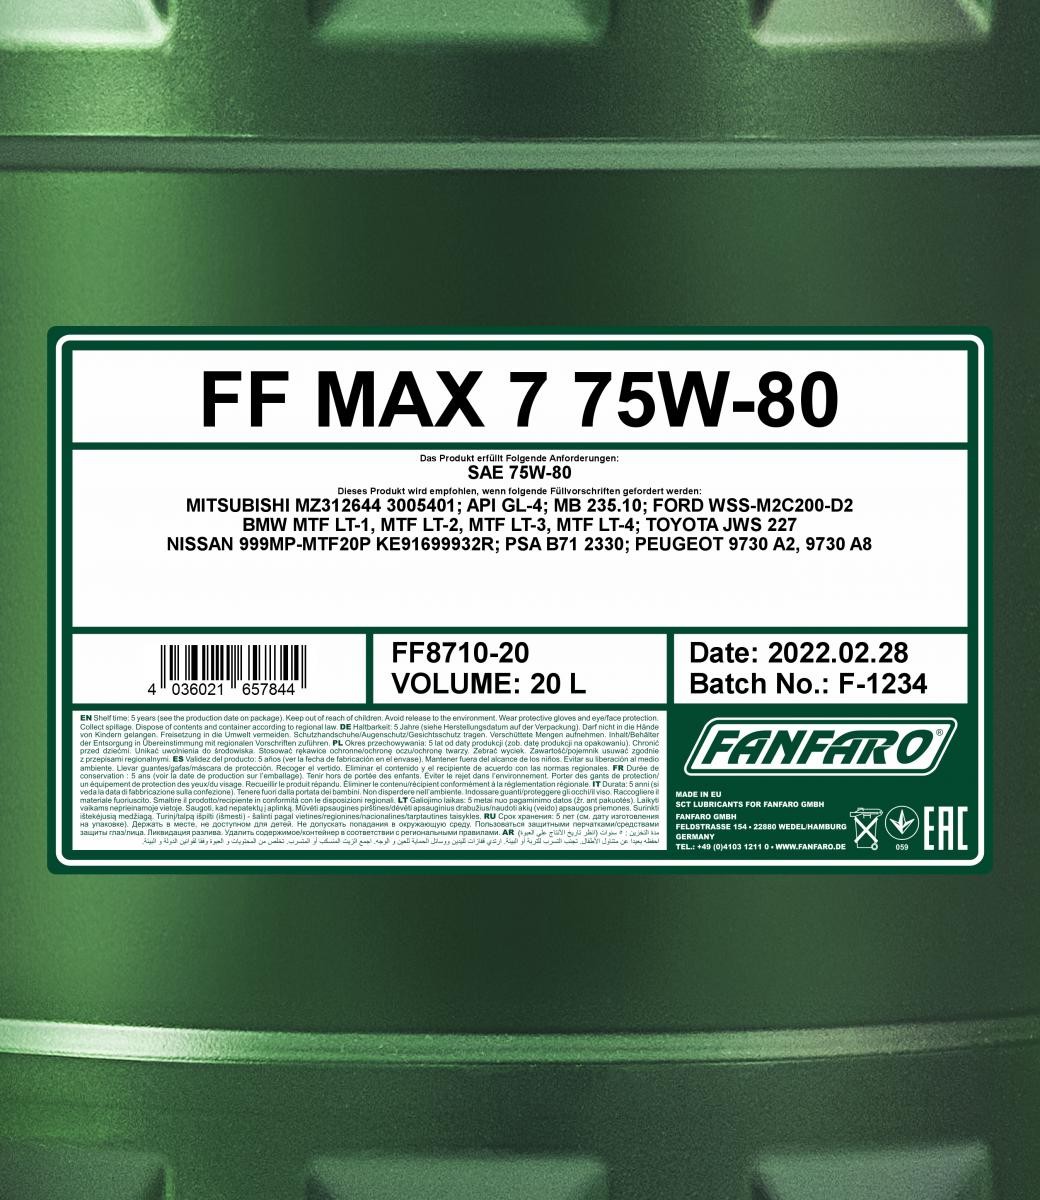 FANFARO Manual Transmission Oil FF8710-20